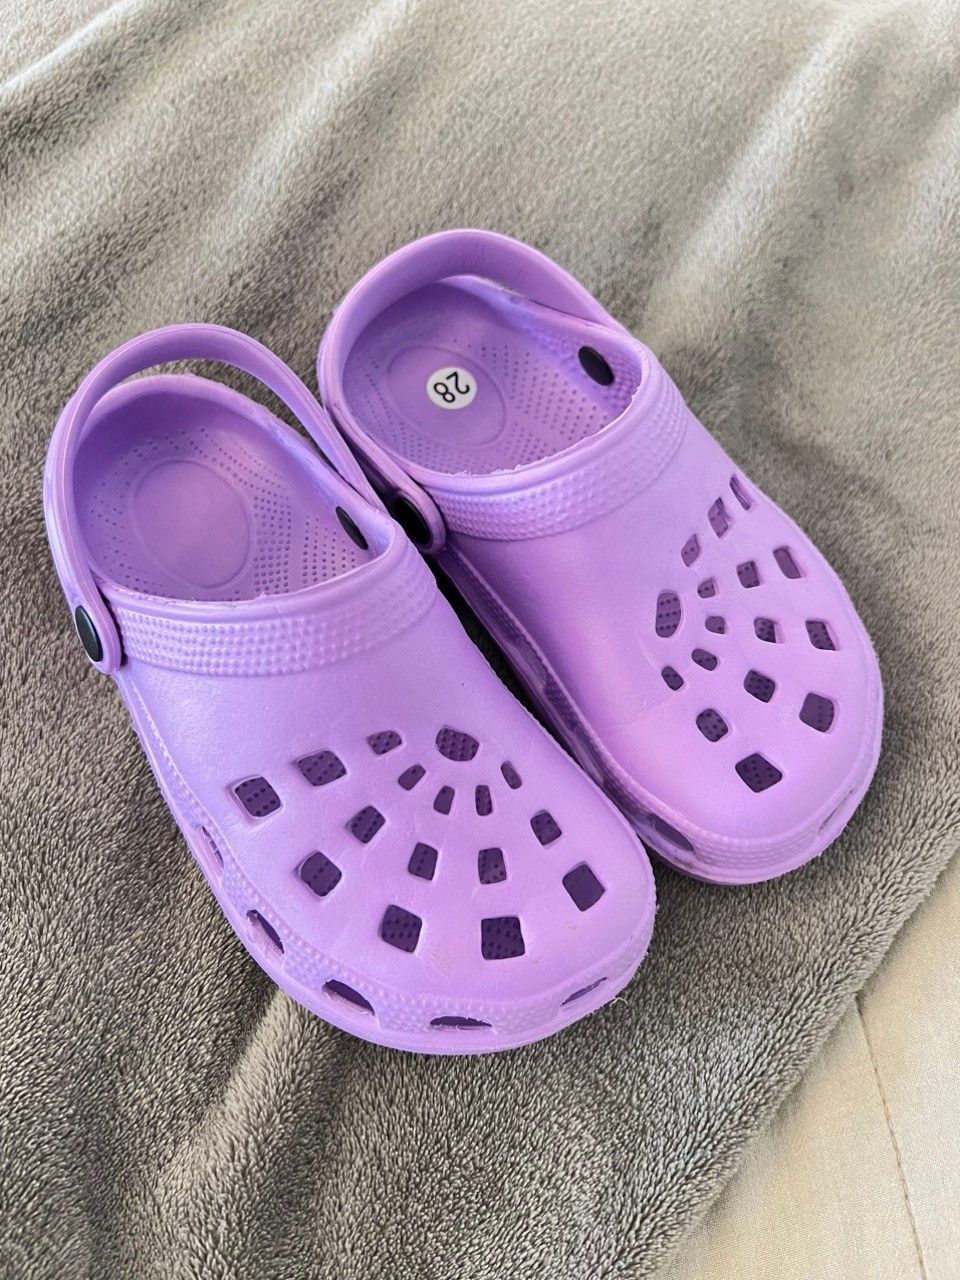 Lasten crocs -tyyppiset kengät 28